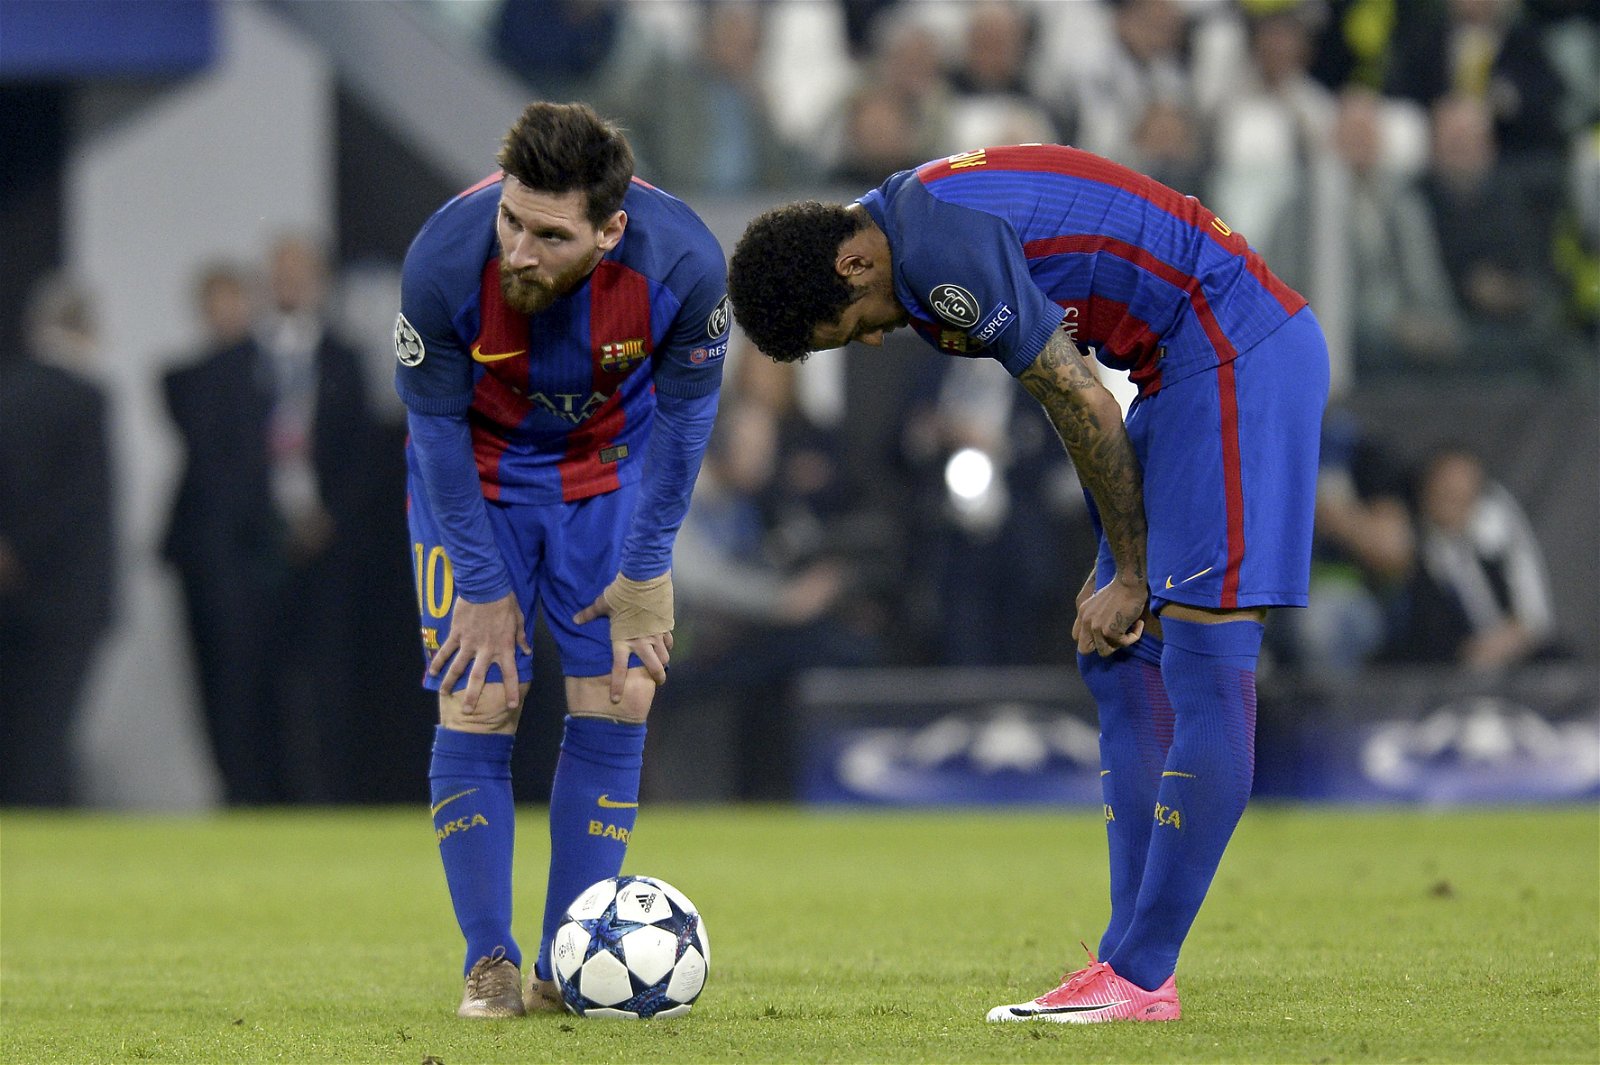 Valverde provides updates on Messi and Neymar